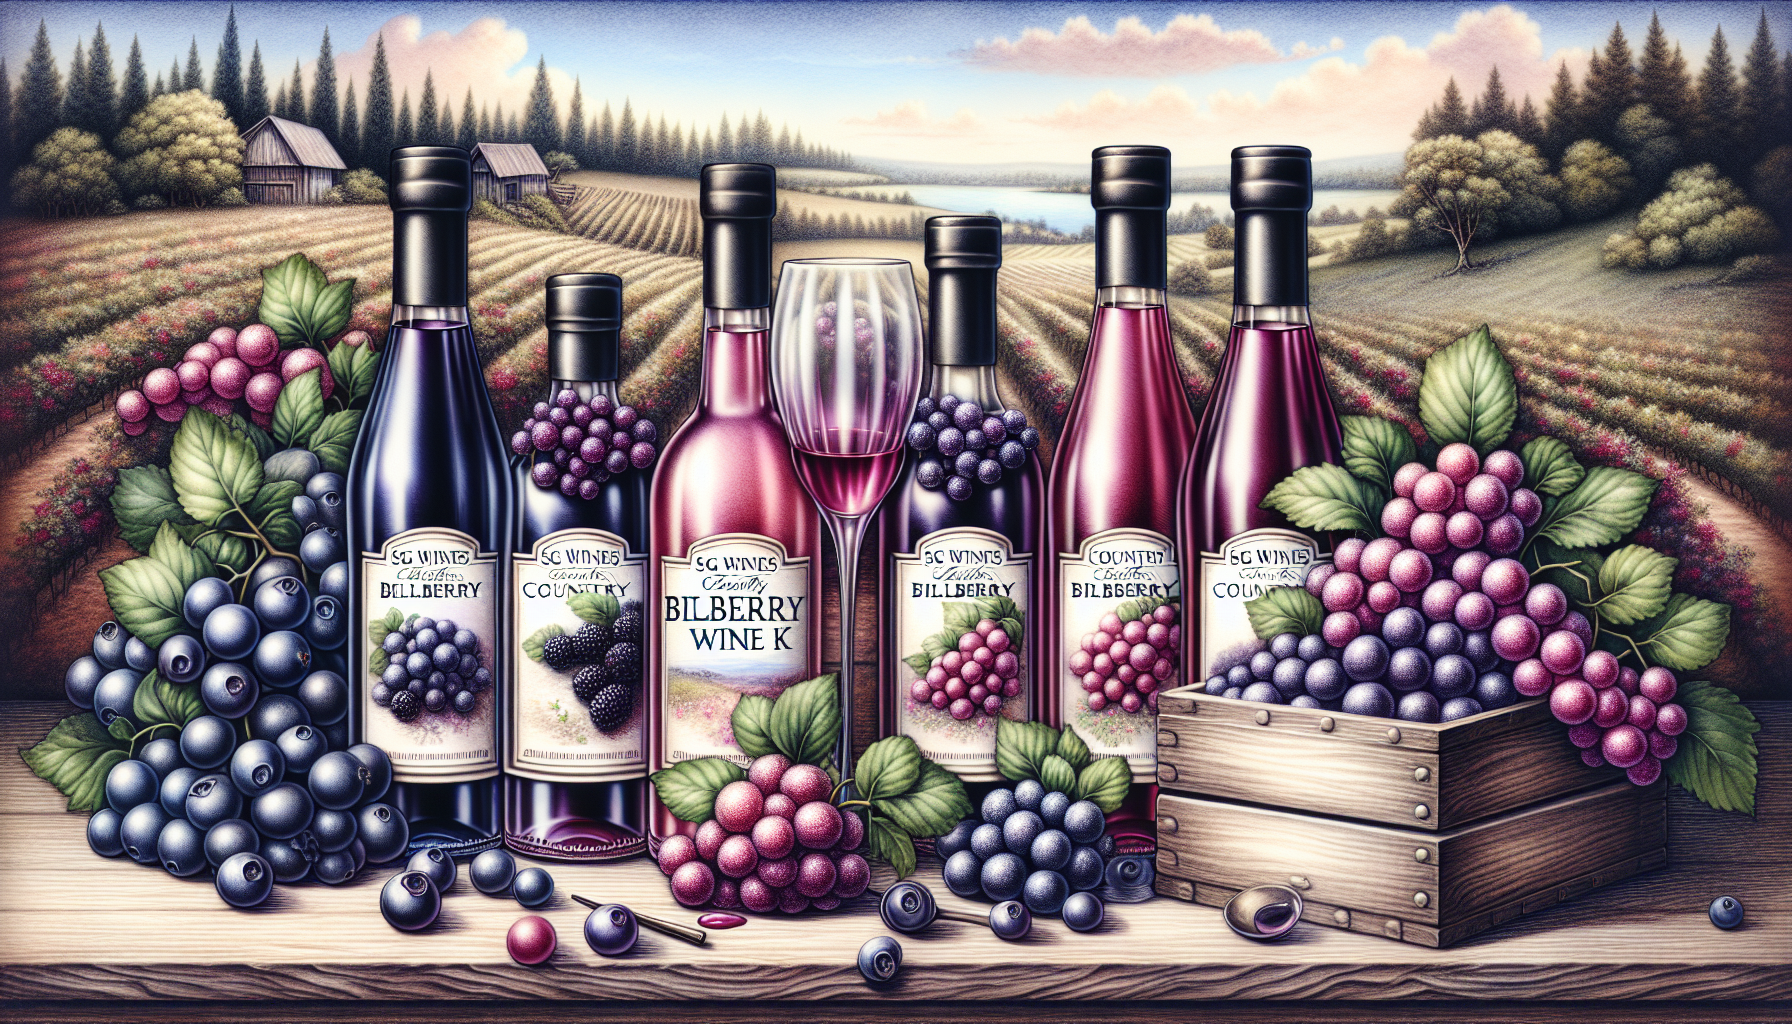 Illustration of bilberries and wine bottles